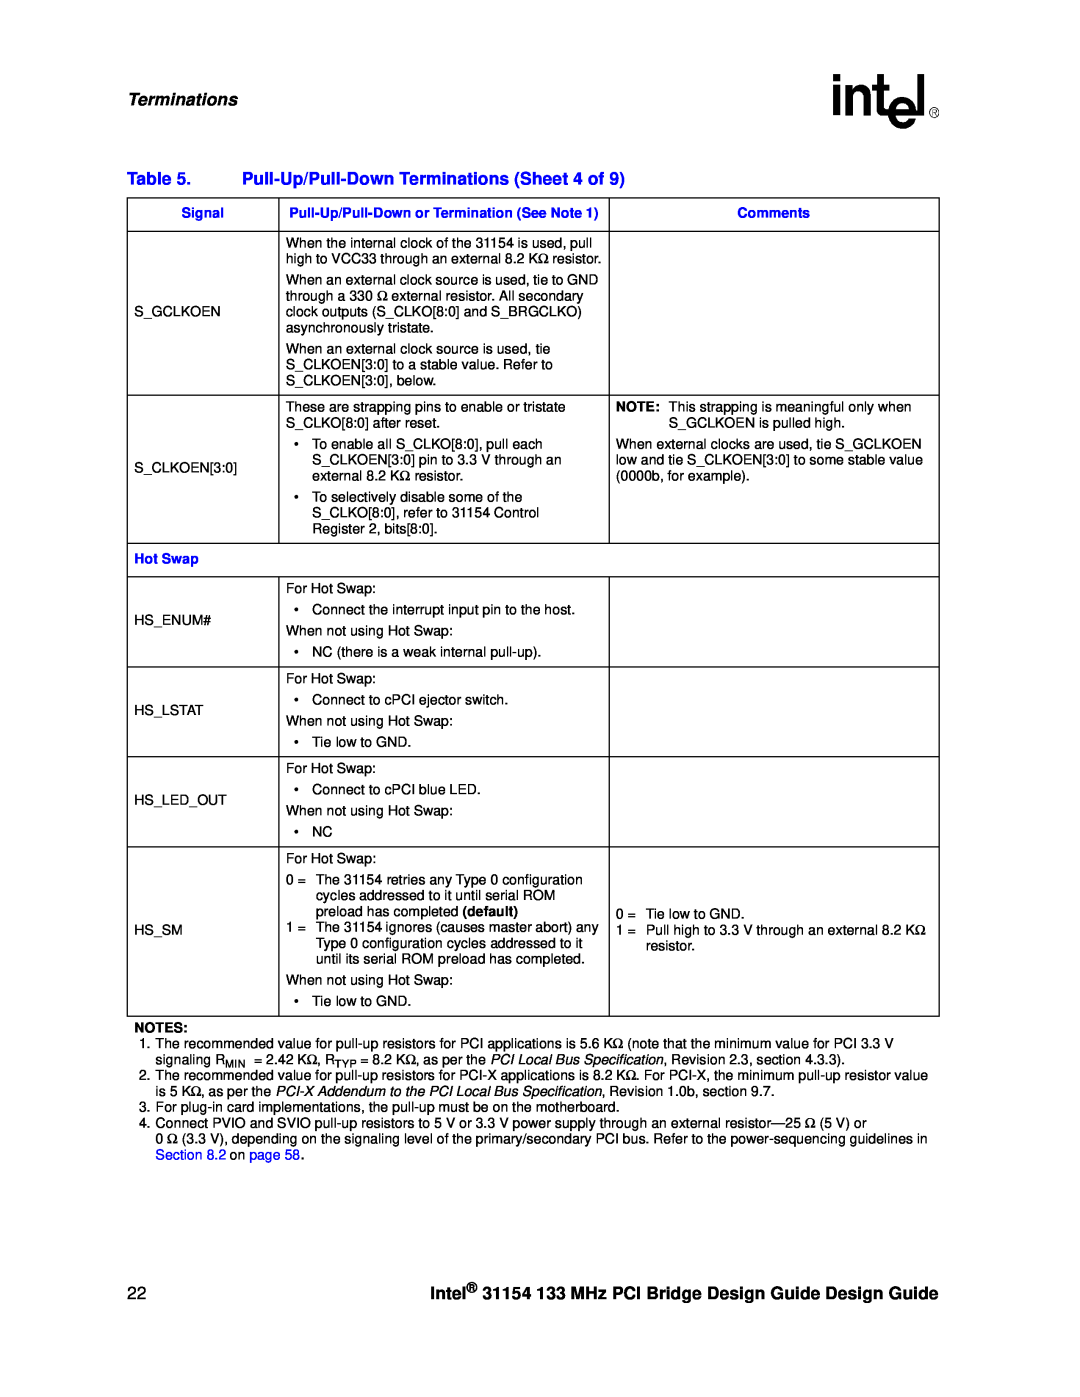 Intel manual Pull-Up/Pull-Down Terminations Sheet 4 of, Intel 31154 133 MHz PCI Bridge Design Guide Design Guide, Signal 